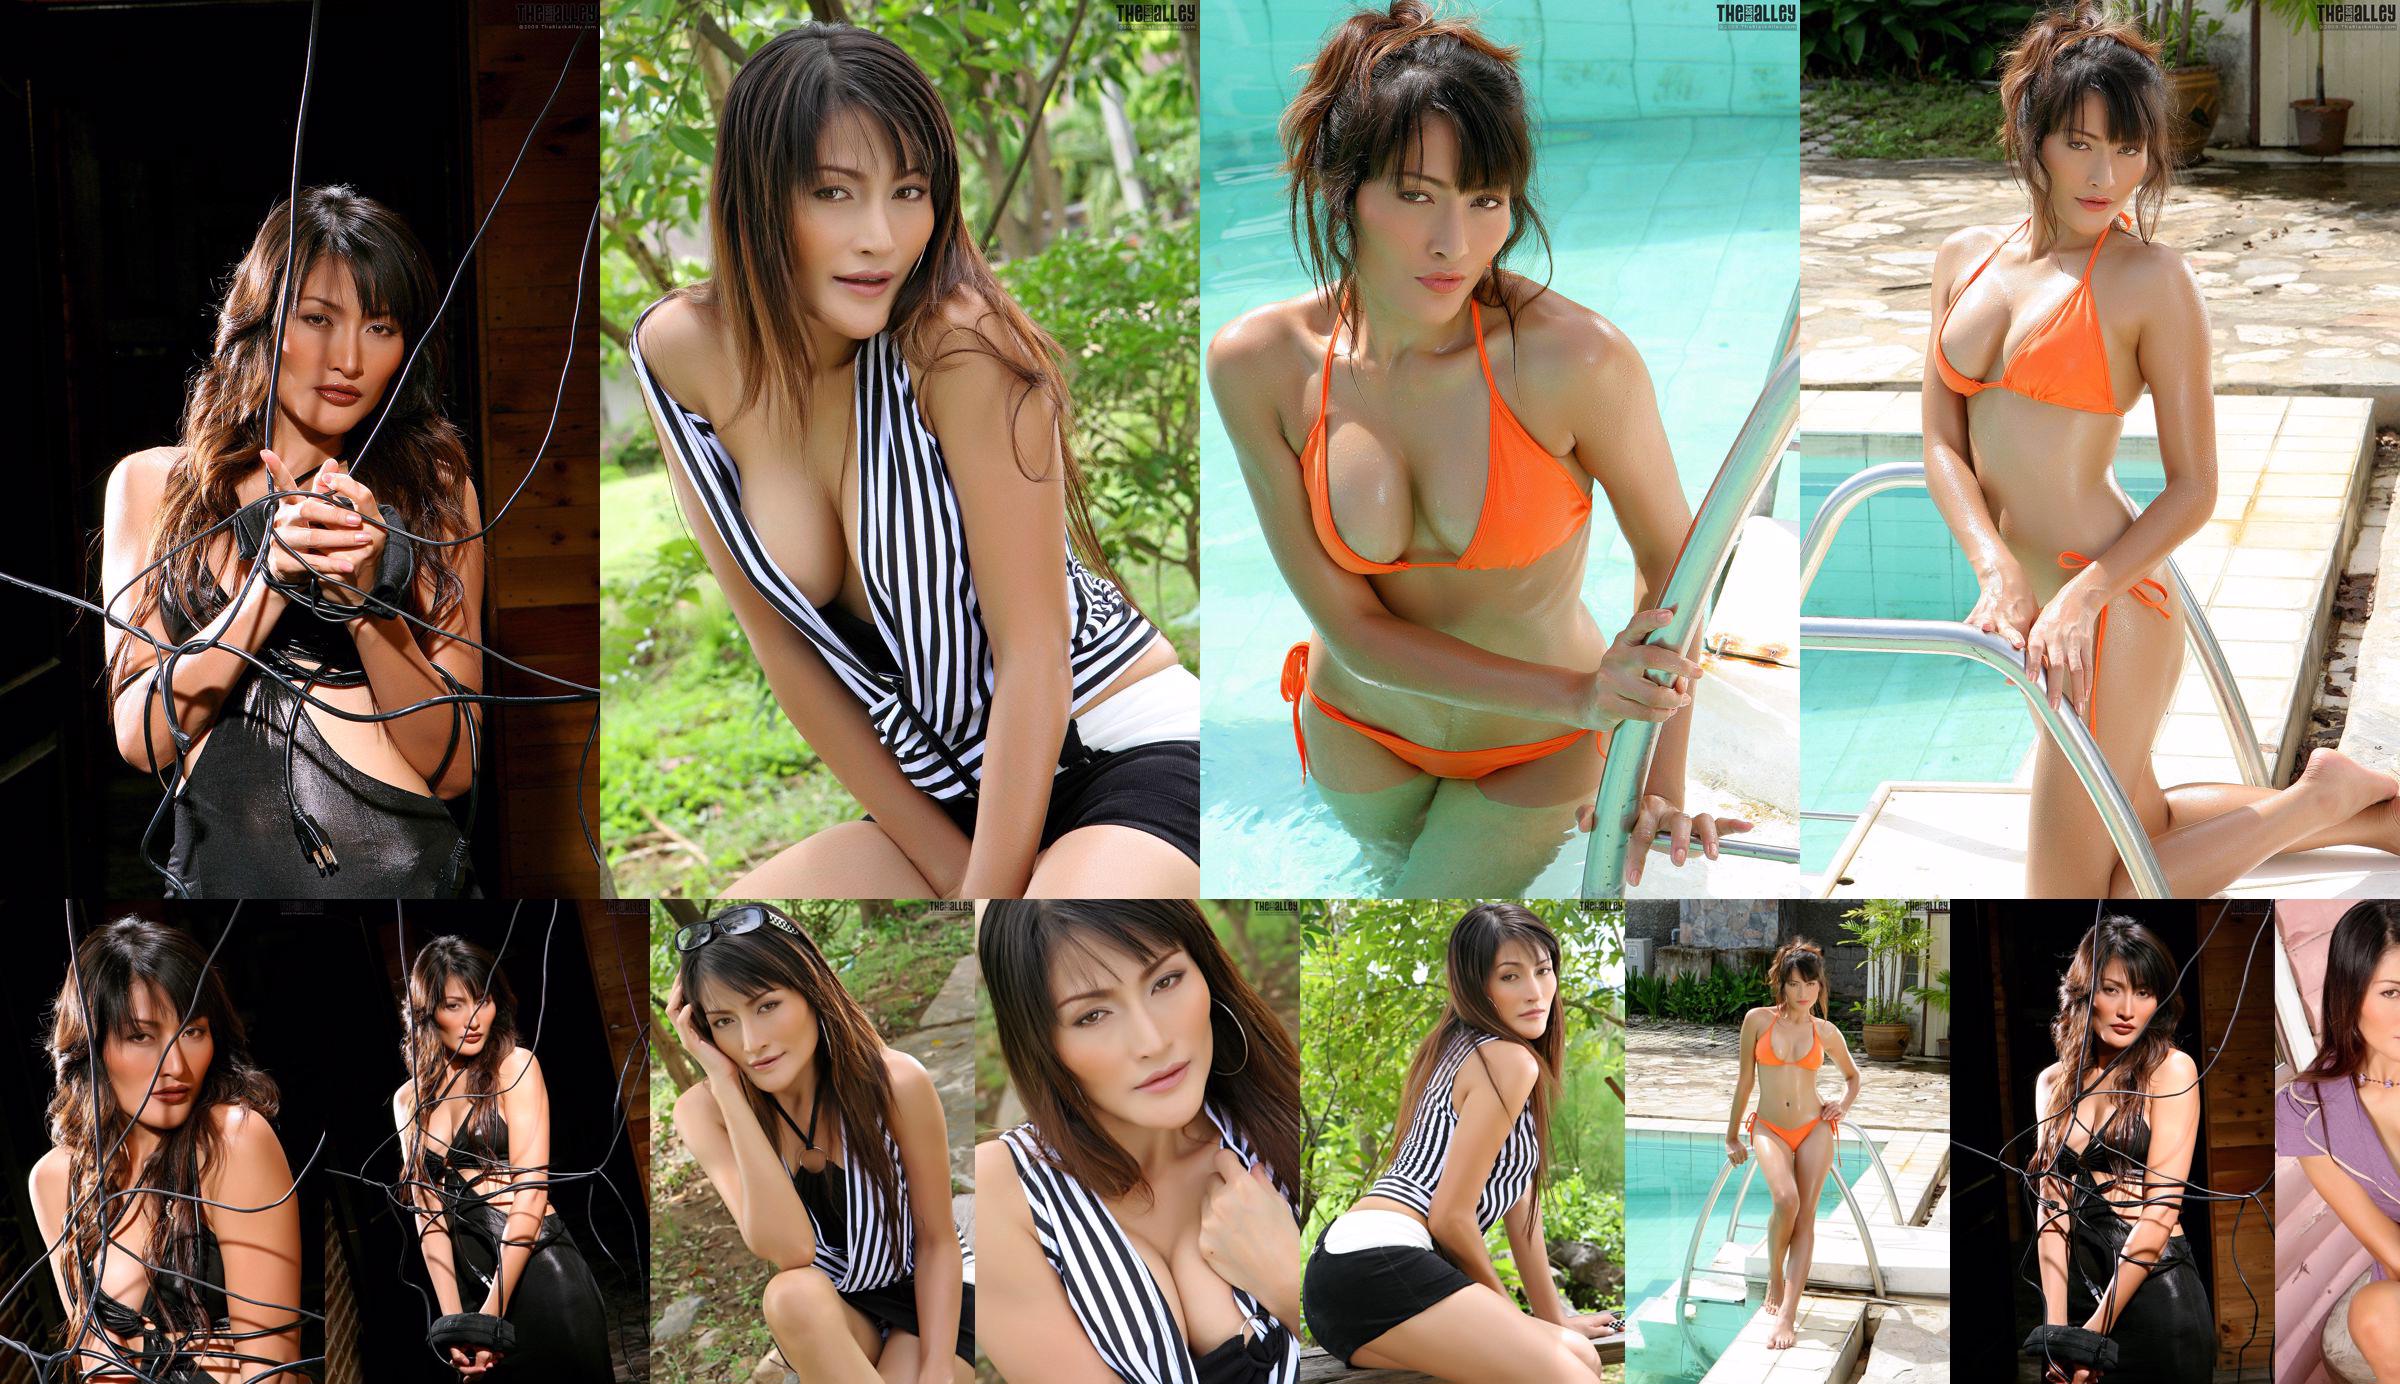 [TheBlackAlley] Kaila Wang swimming pool bikini No.cfab7c Page 1